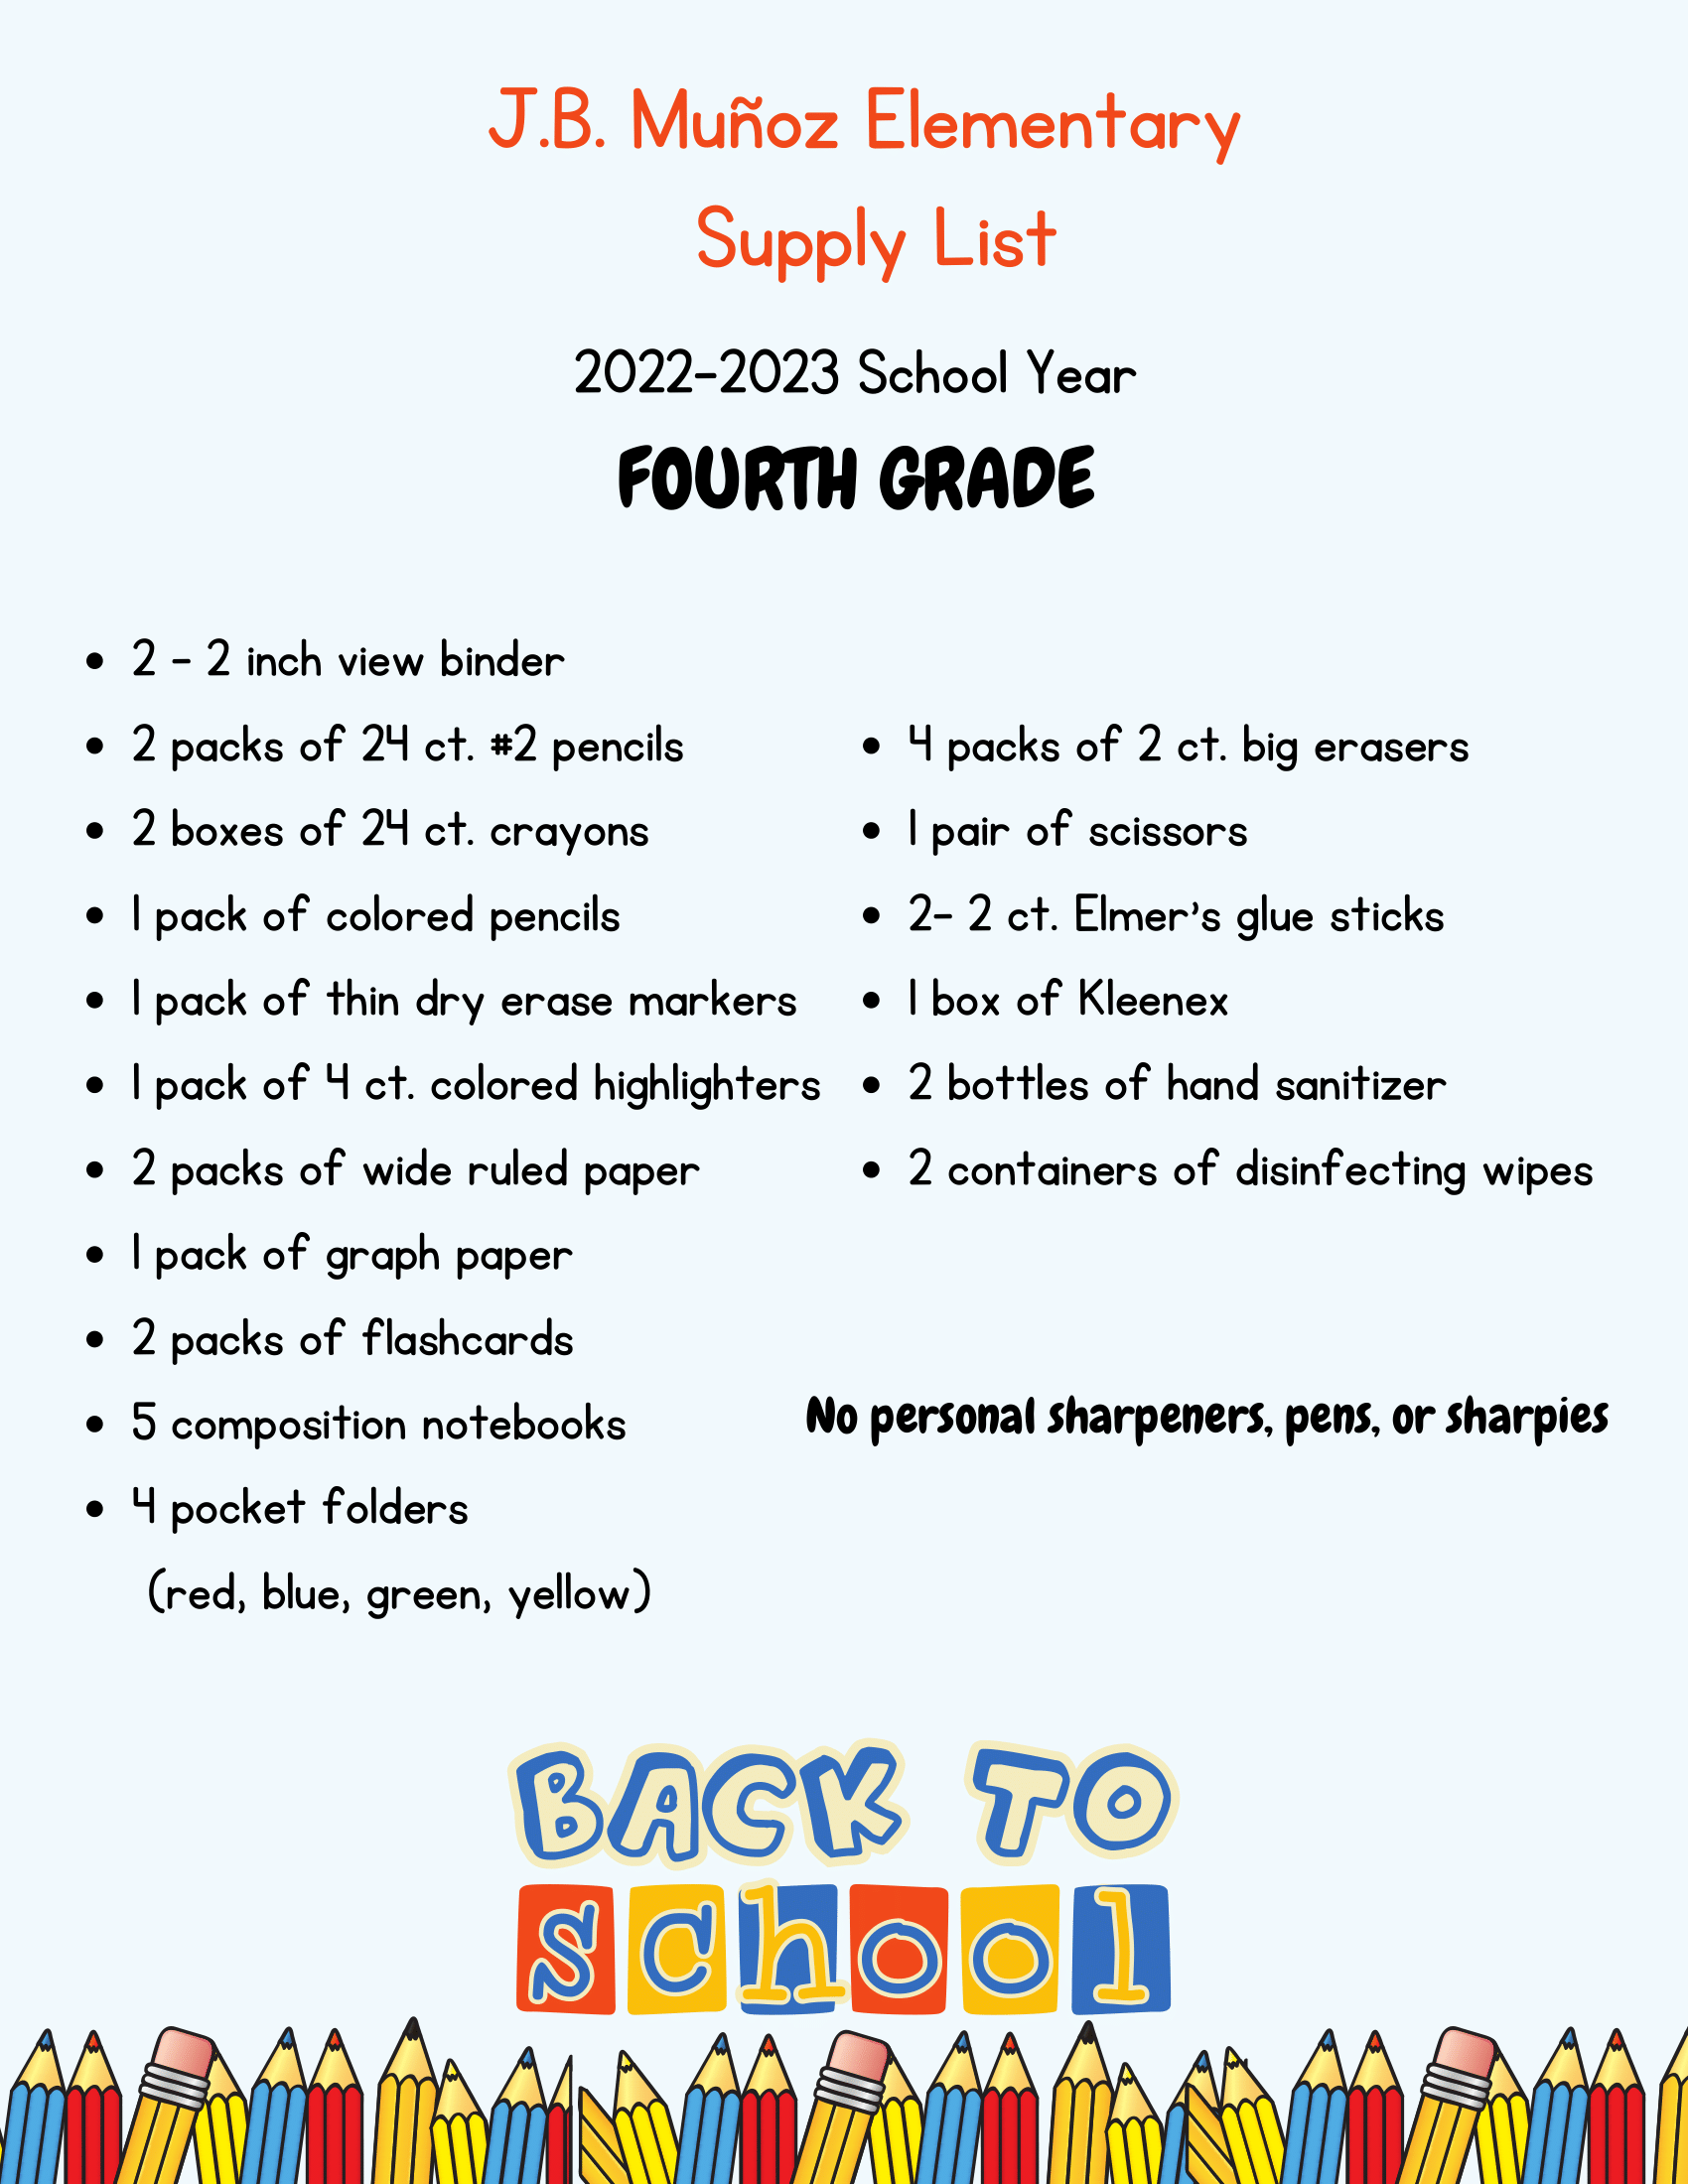 Fourth grade school supply list